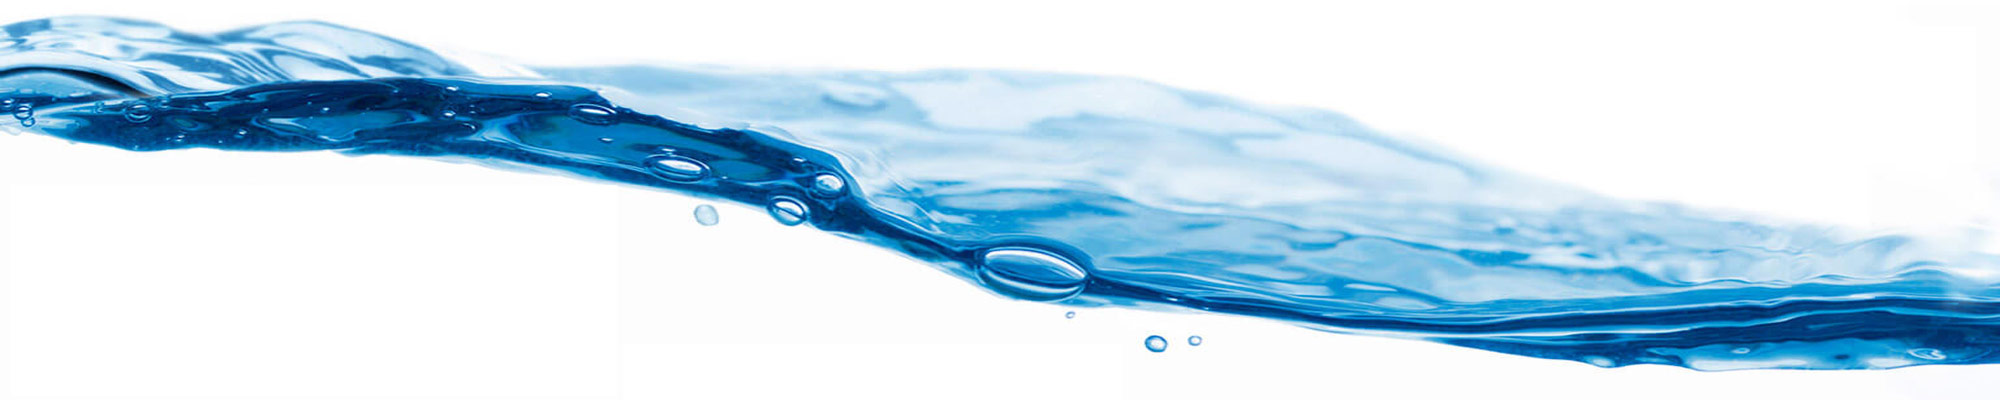 blue notes water splash